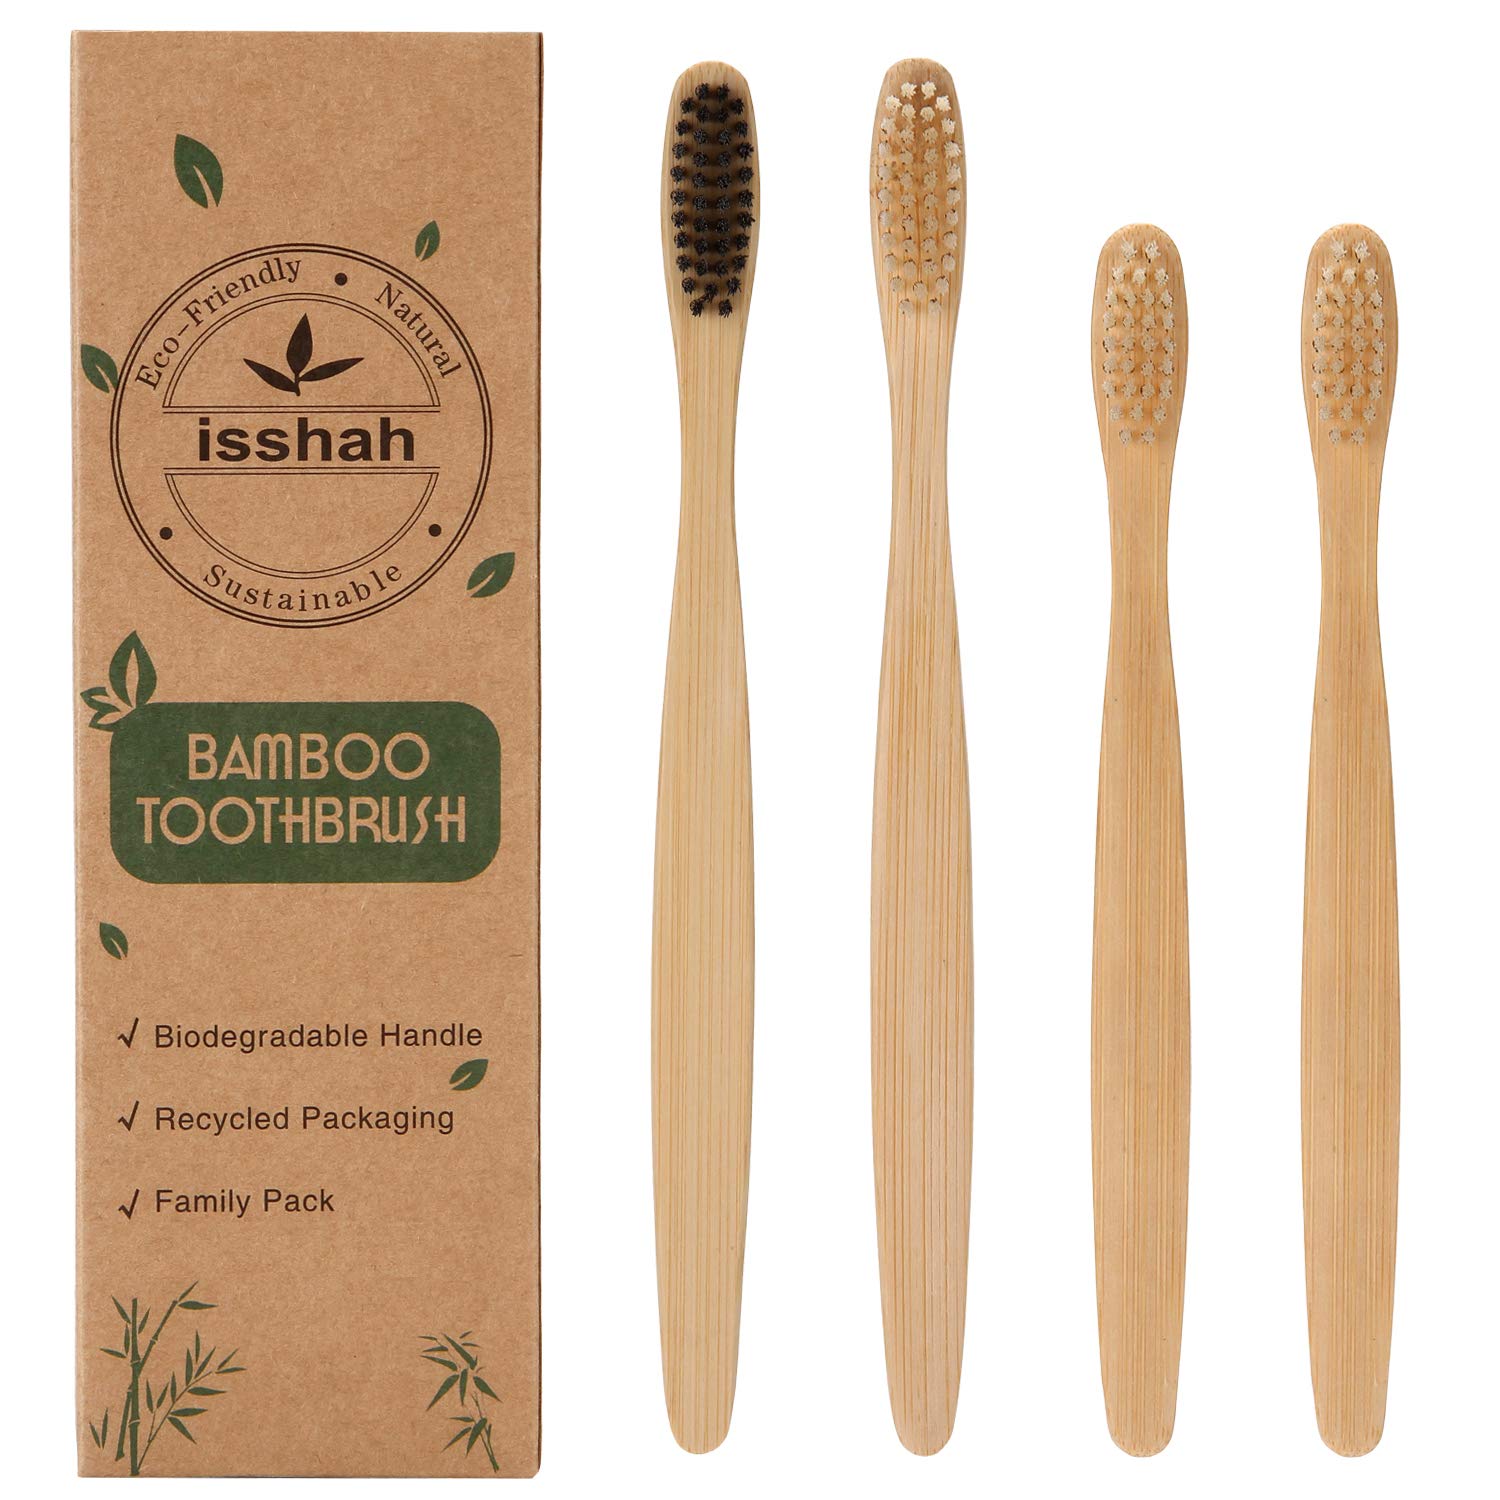 innovative startup ideas - bamboo toothbrush